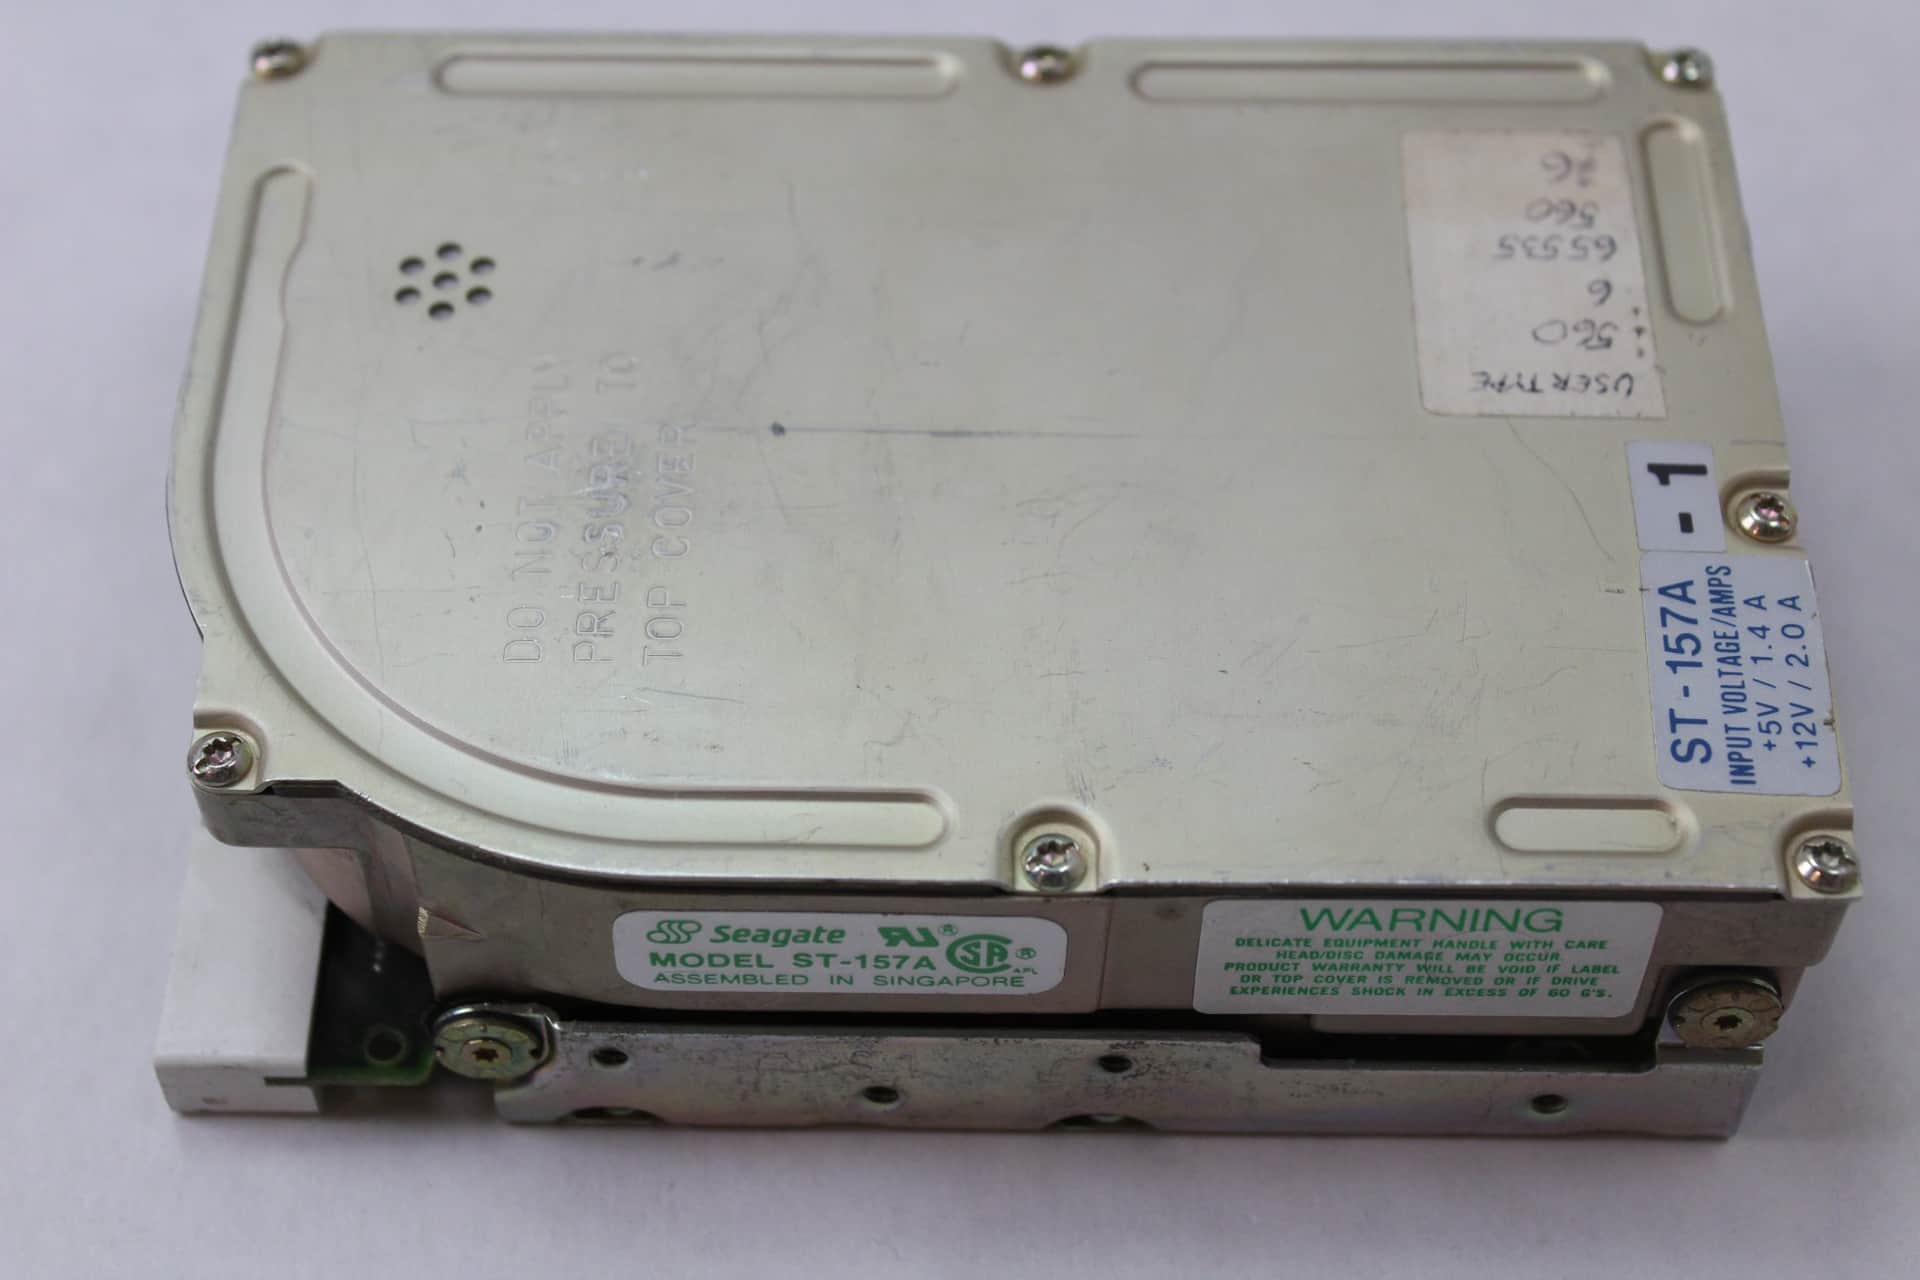 Highscreen Kompakt Serie-III 286 16MHz - Pevný disk